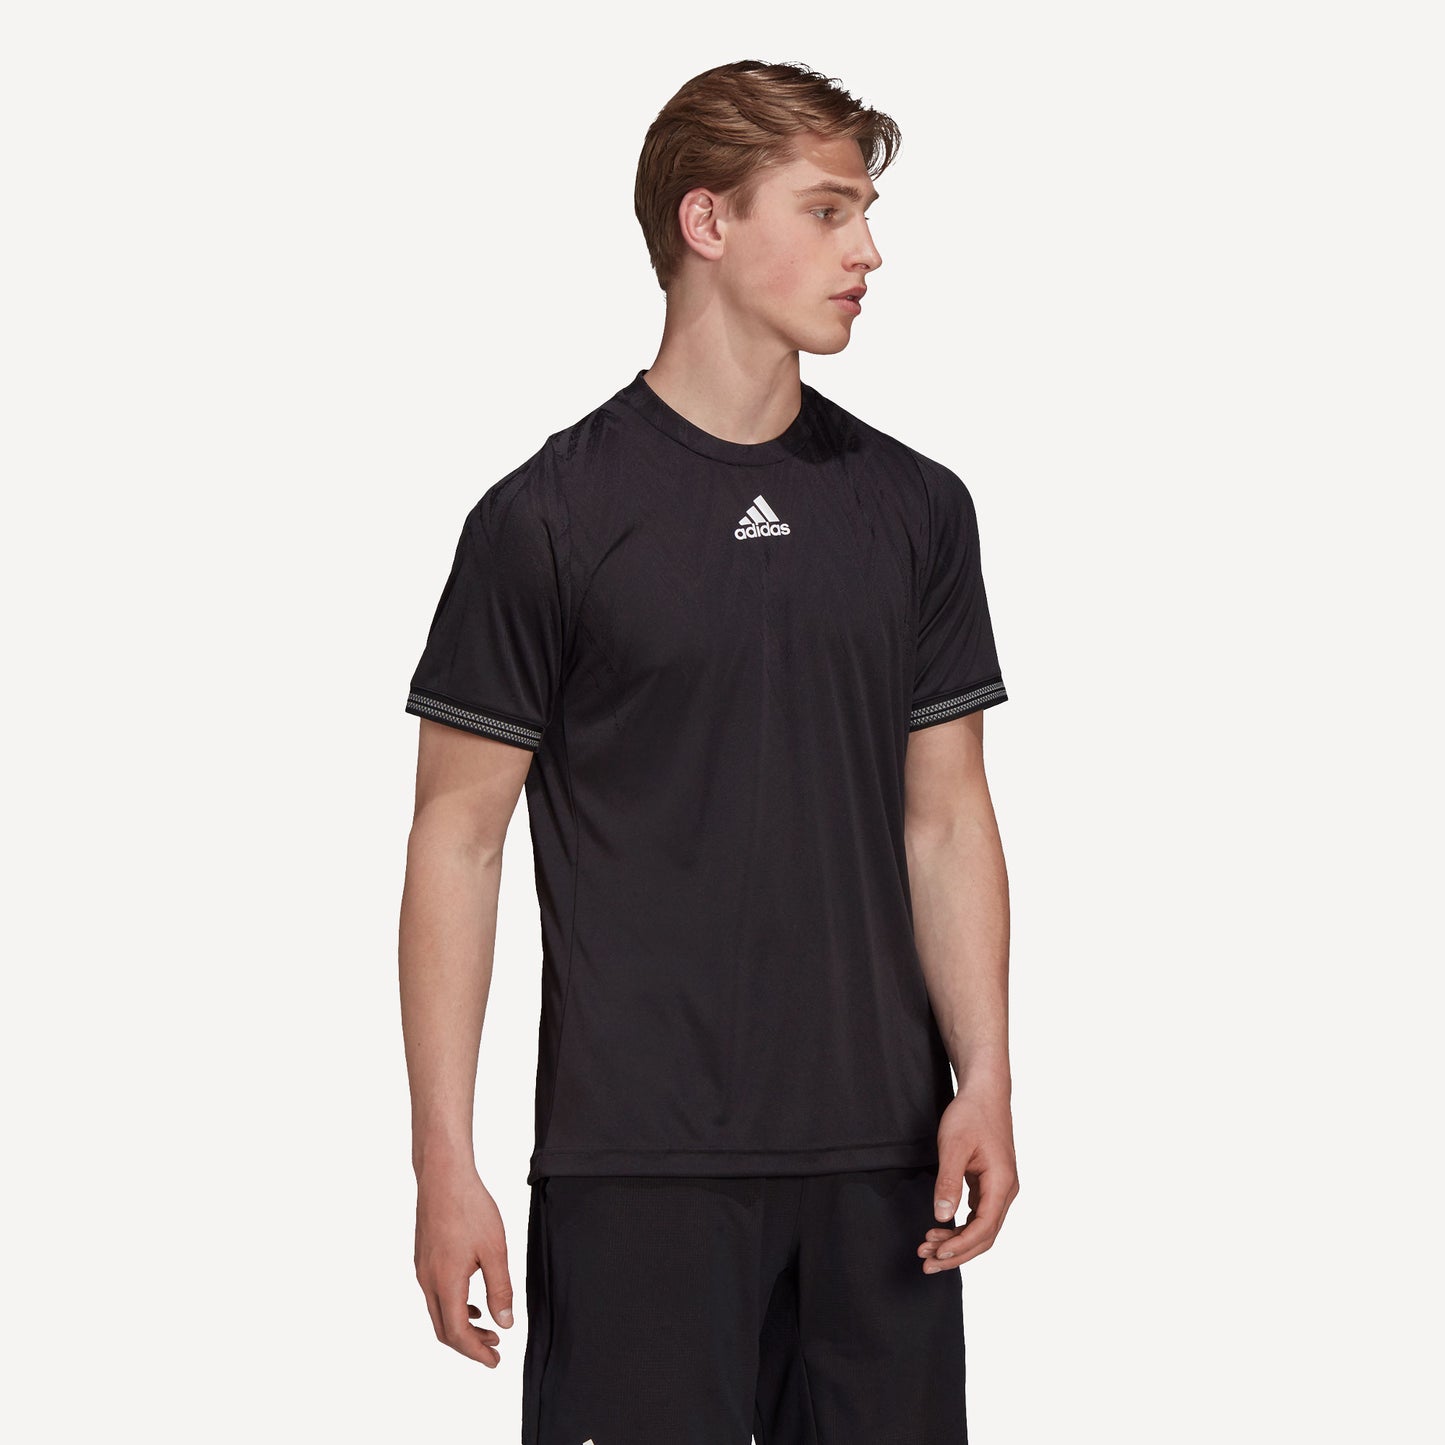 adidas Freelift Primeblue Men's Tennis Shirt Black (3)